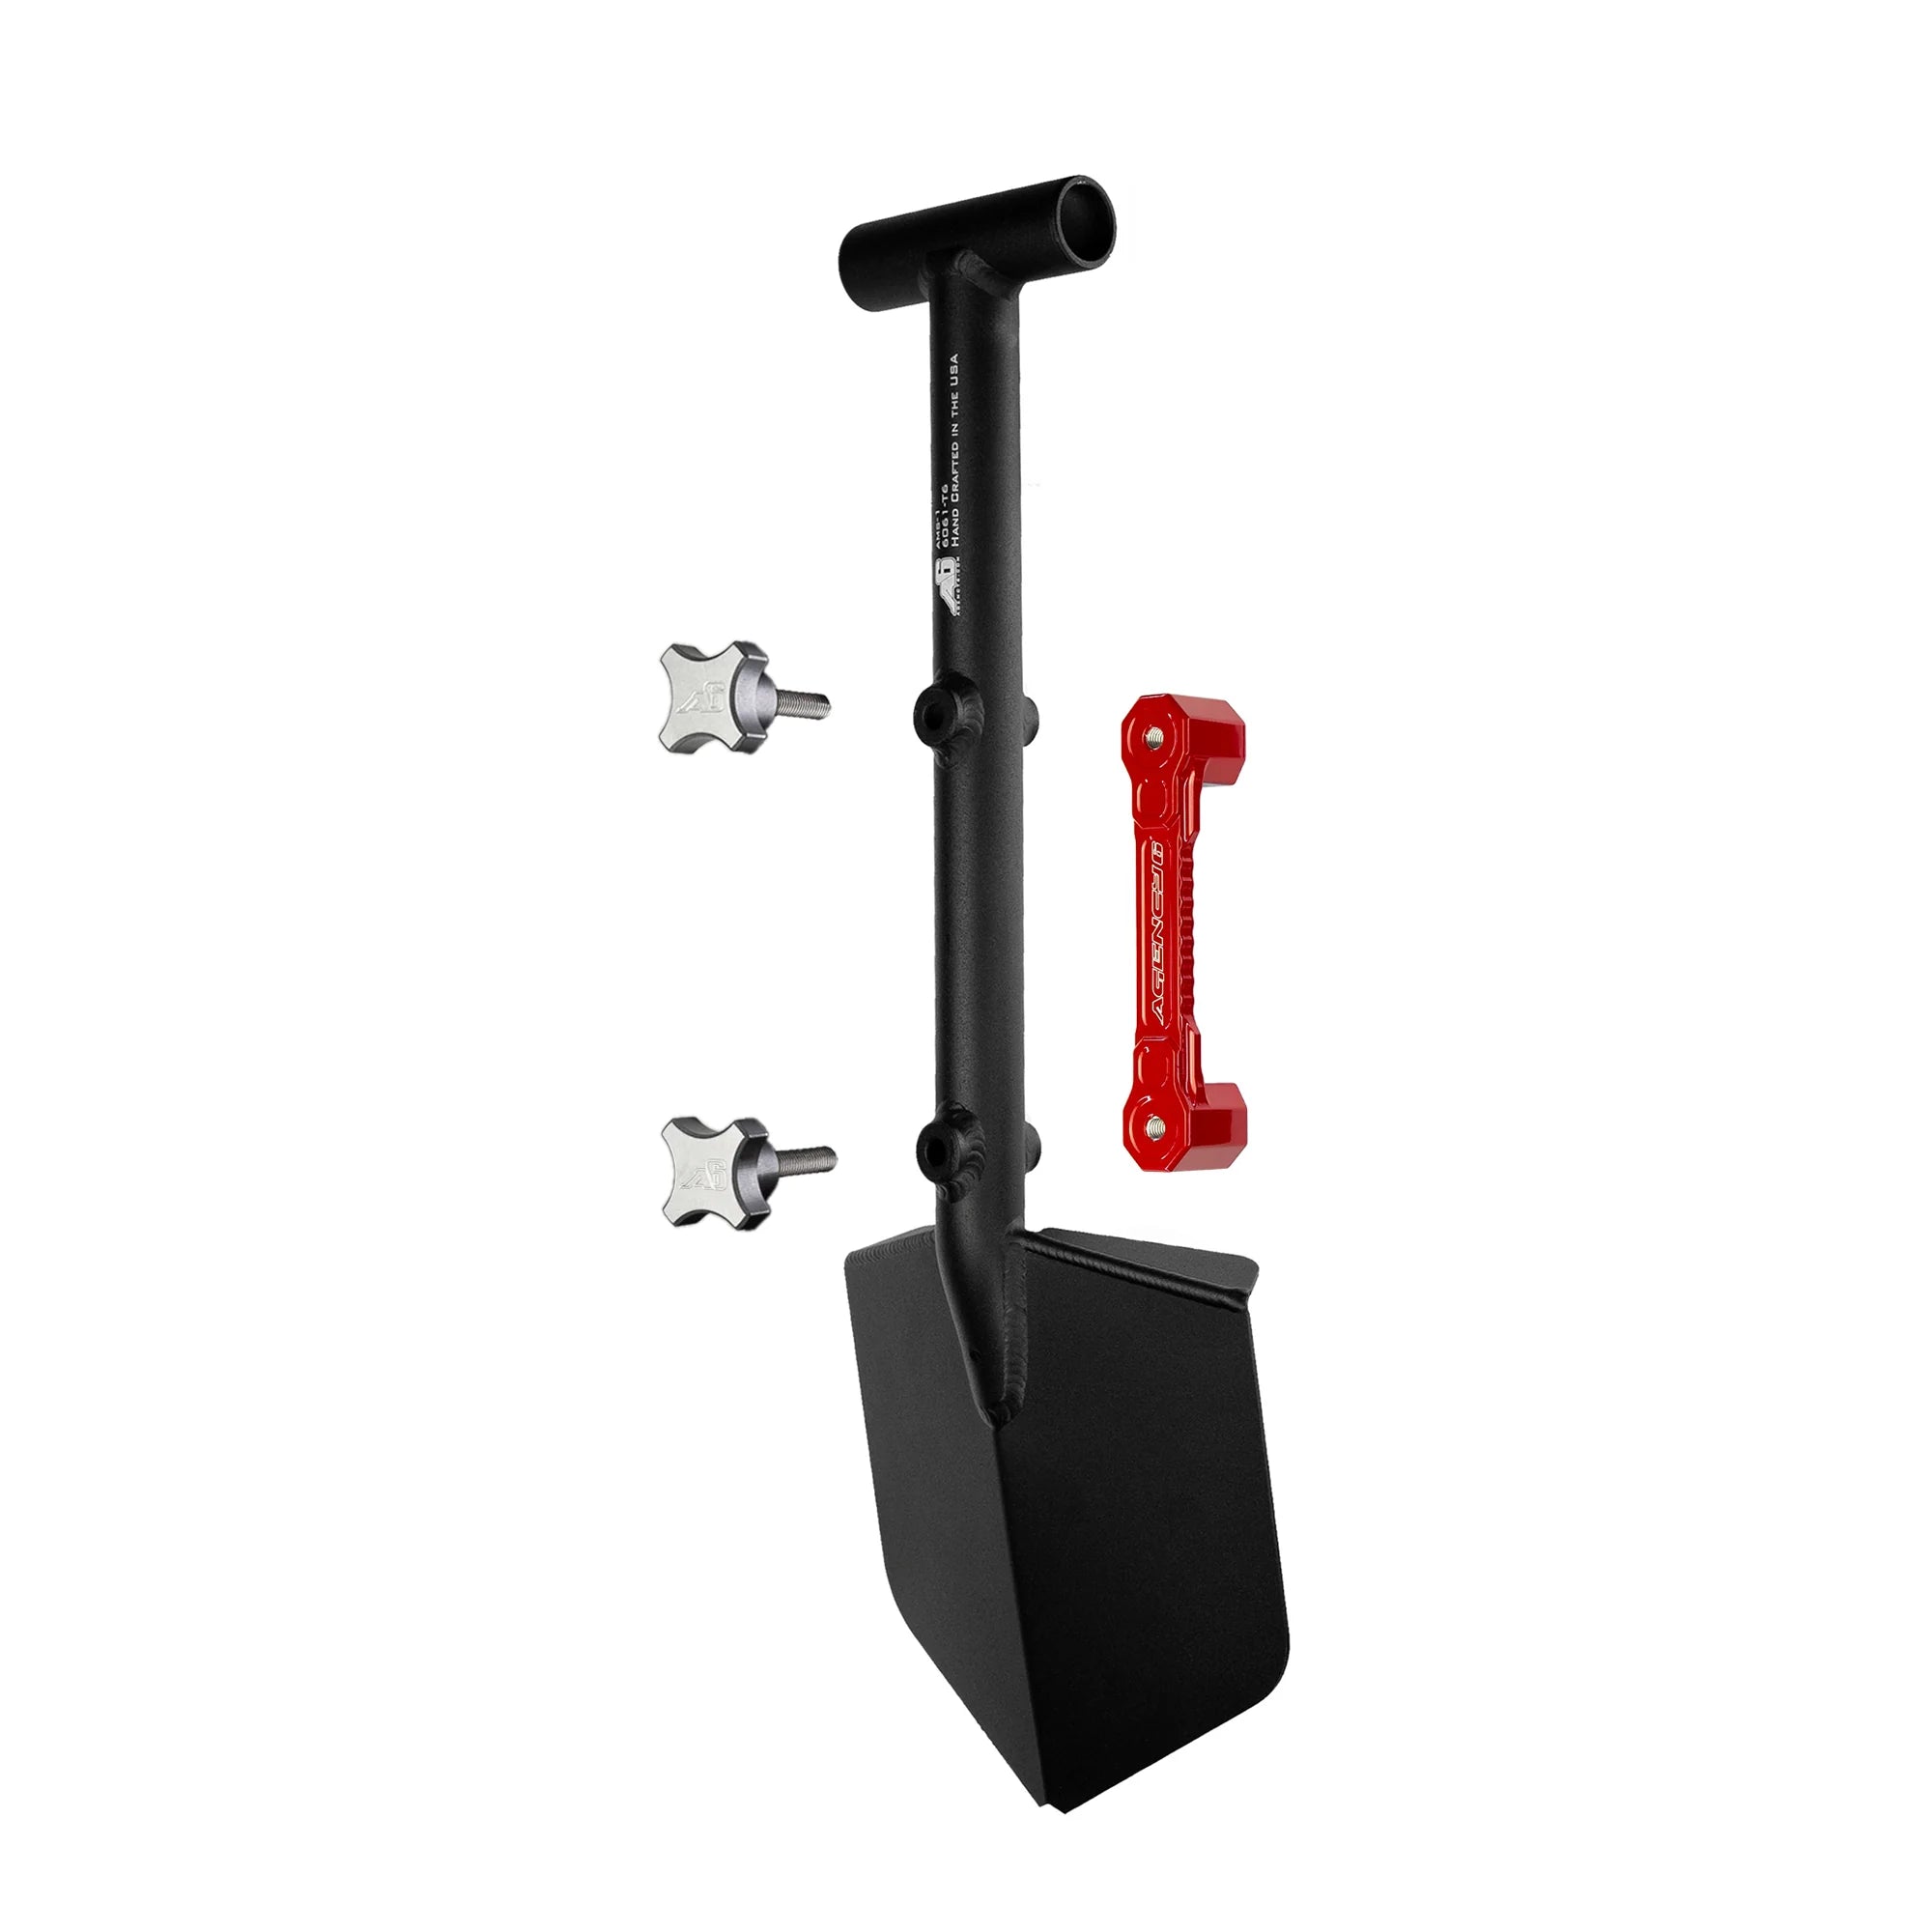 Agency 6 Shovel / Mount Combo - Black Mini Shovel / Red SSM With Knobs